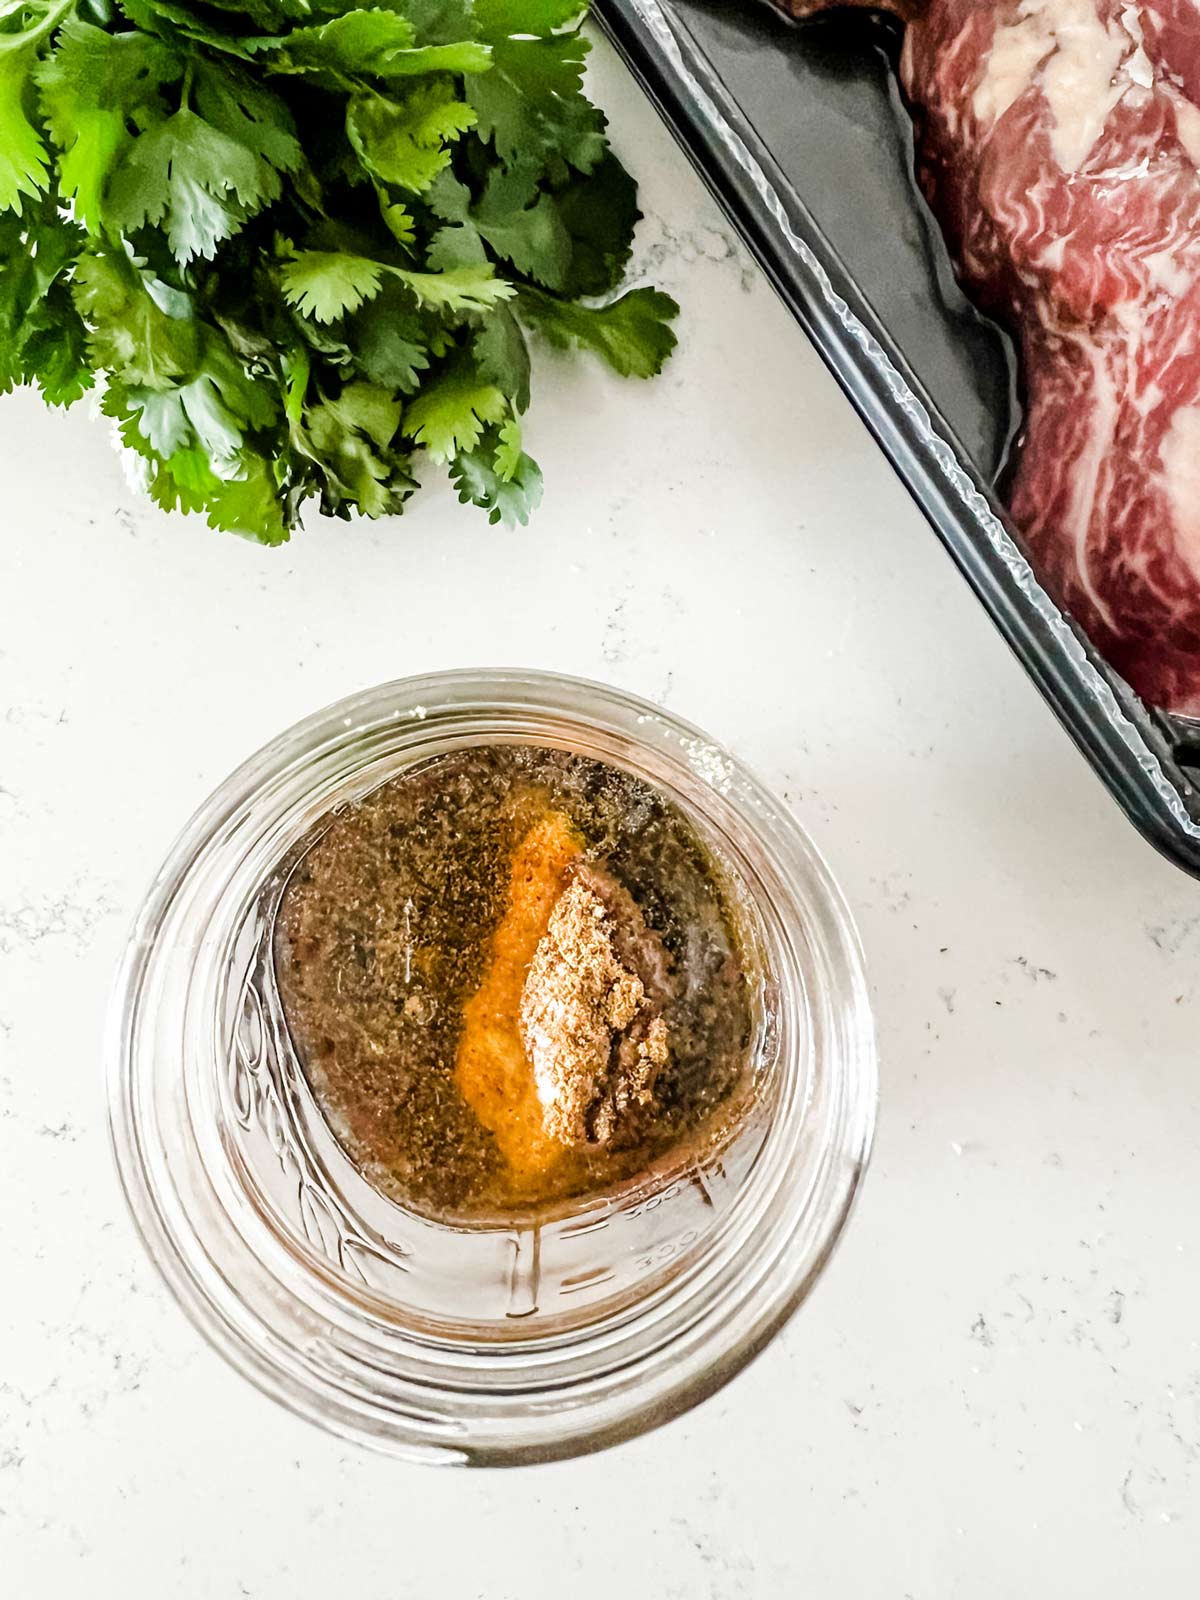 Steak taco marinade ingredients in a glass jar.